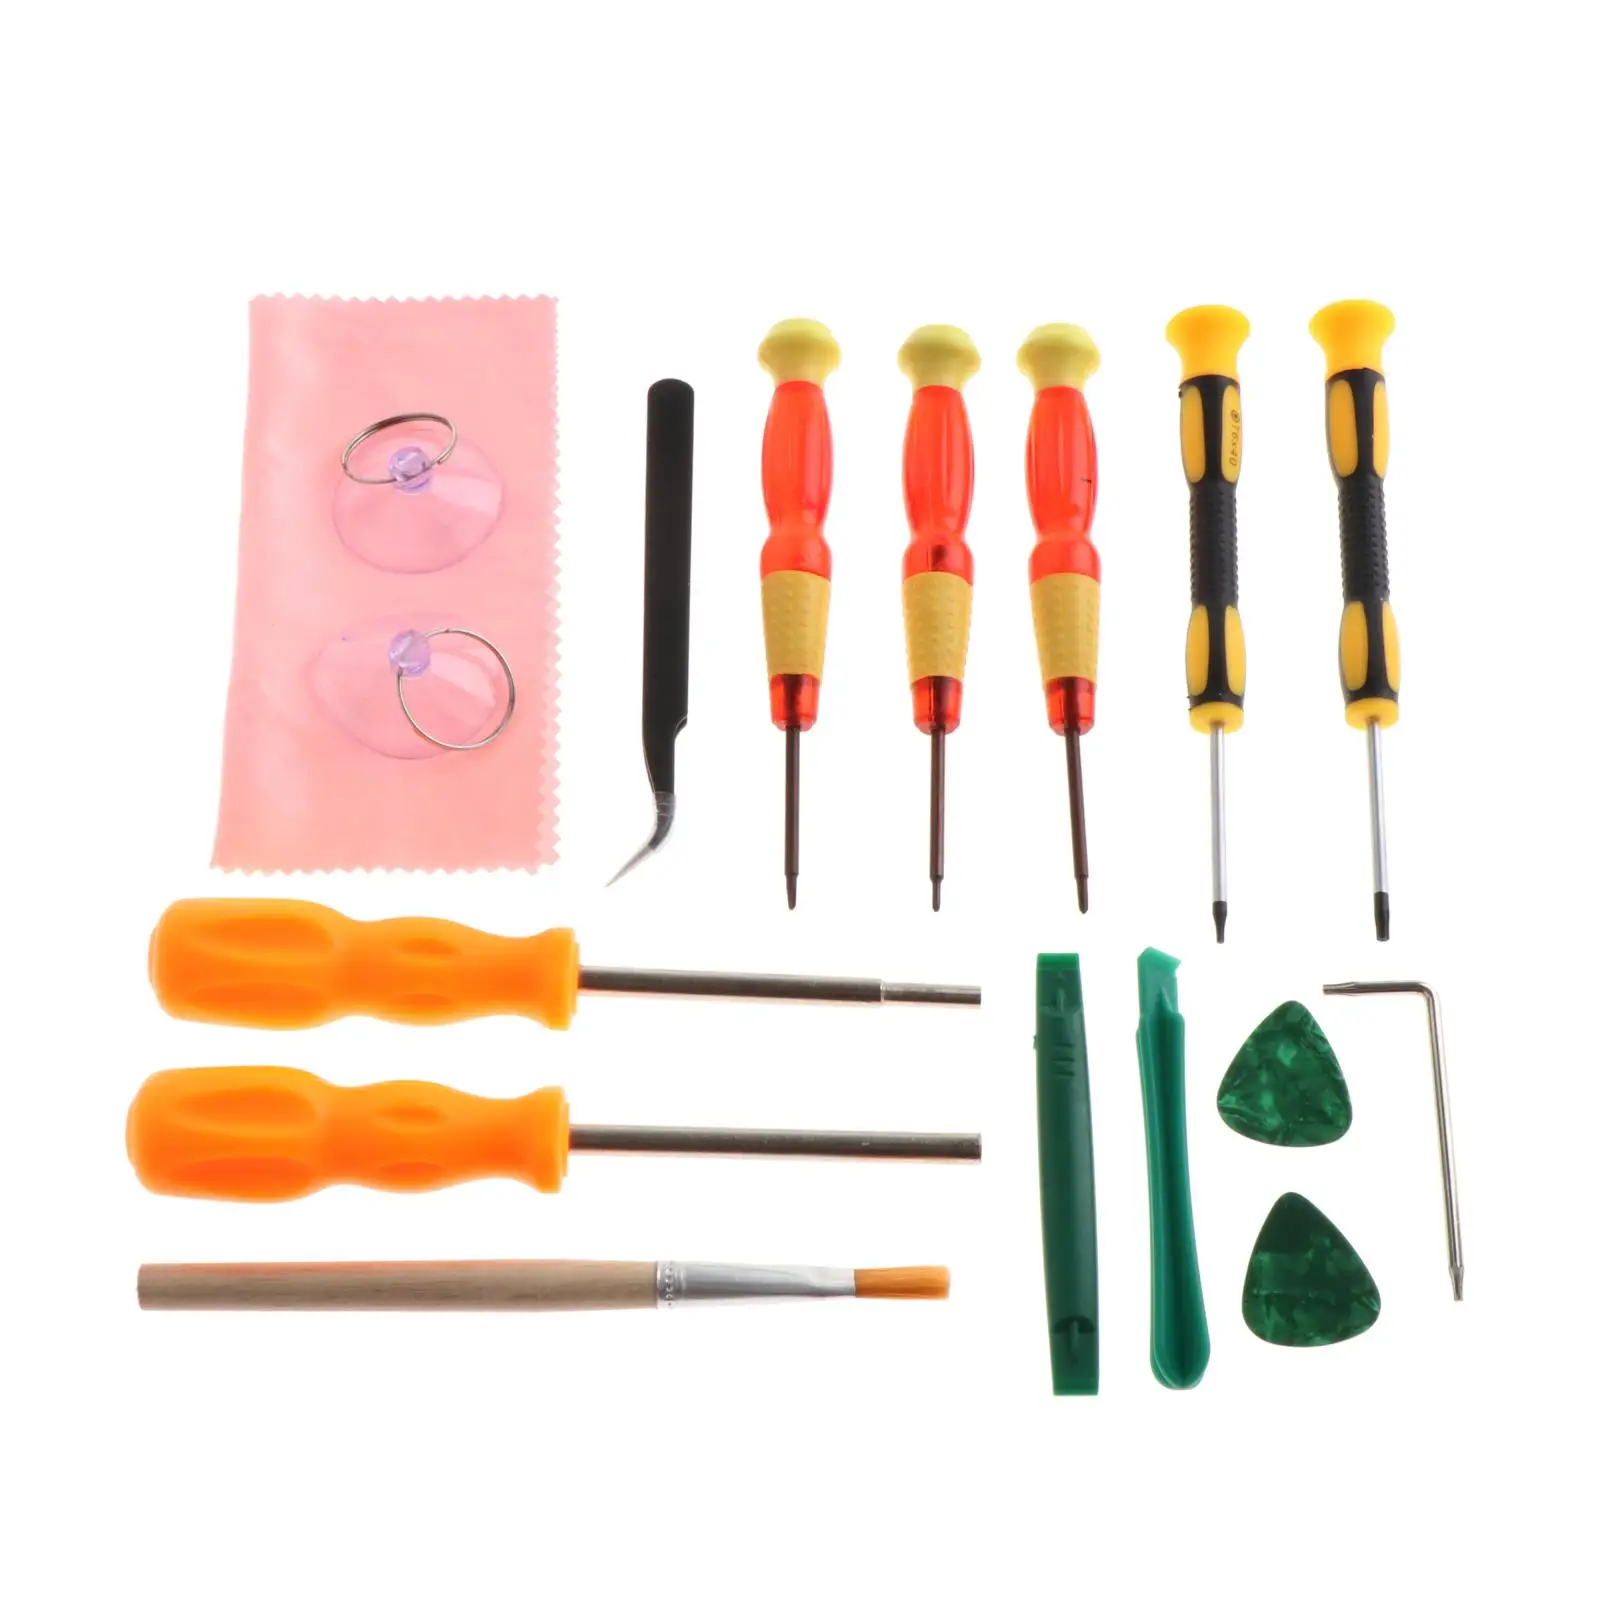 17 in 1 Precision Screwdriver Repair Kit Screwdriver Tool Set with Tweezer Cleaning Brush Cleaning Cloth Repair Hand Tool